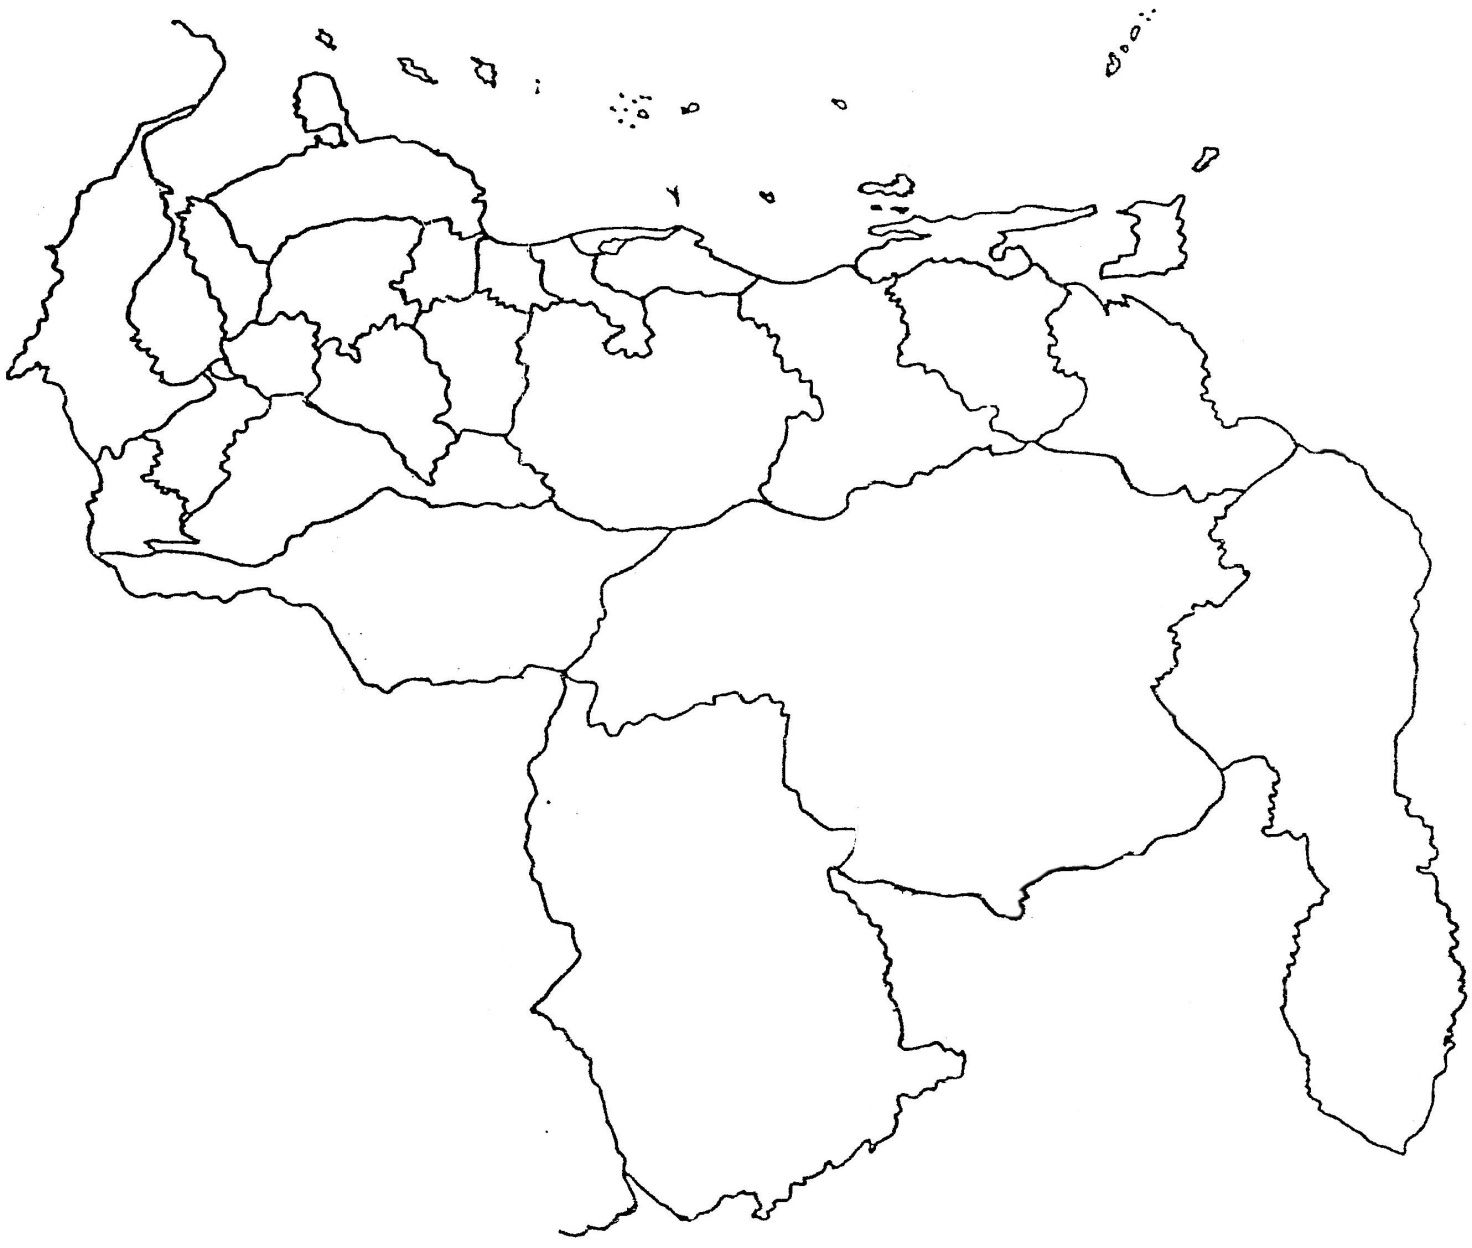 Mapa De Venezuela Vector At Collection Of Mapa De Venezuela Vector Free For 3792